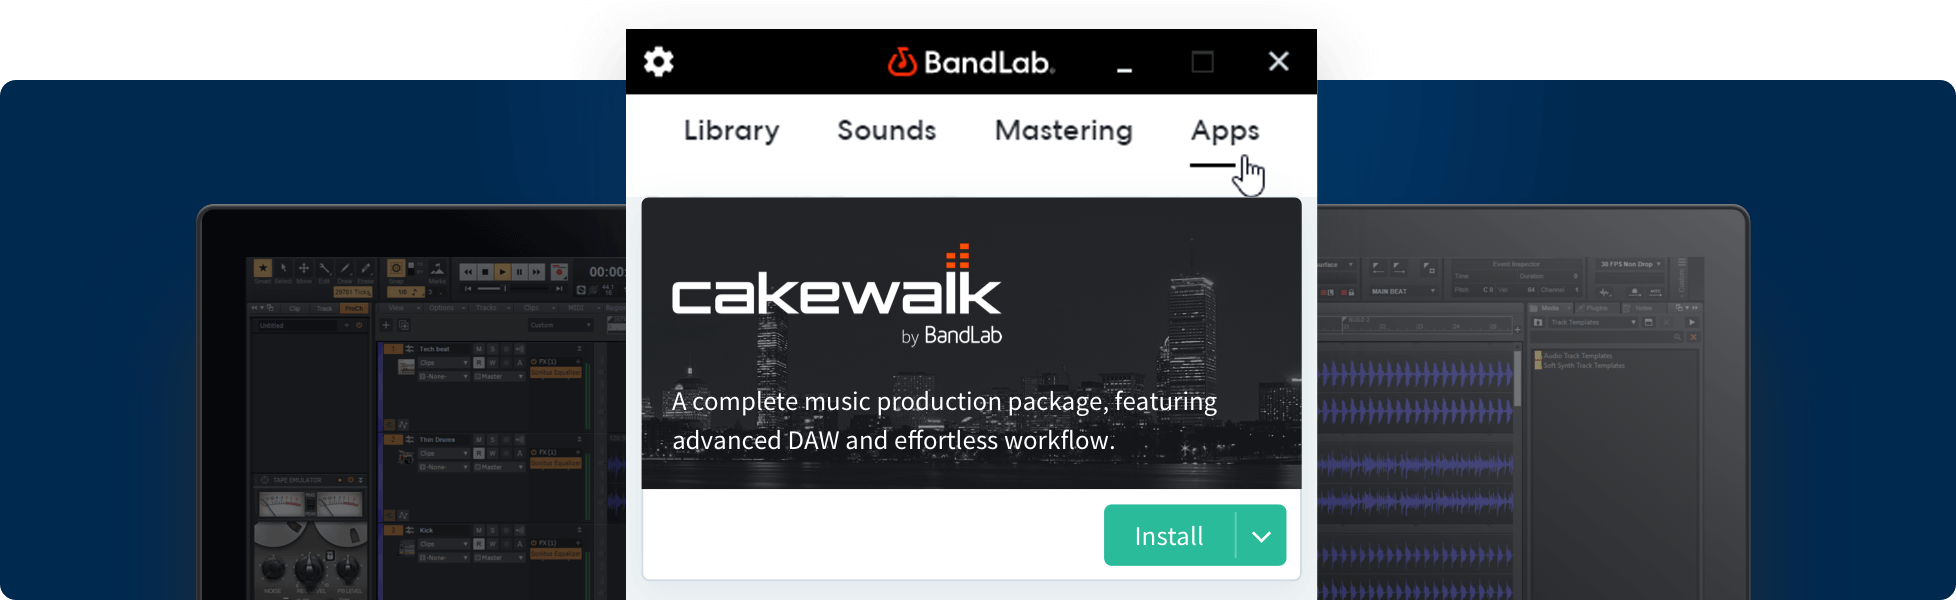 cakewalk by bandlab app